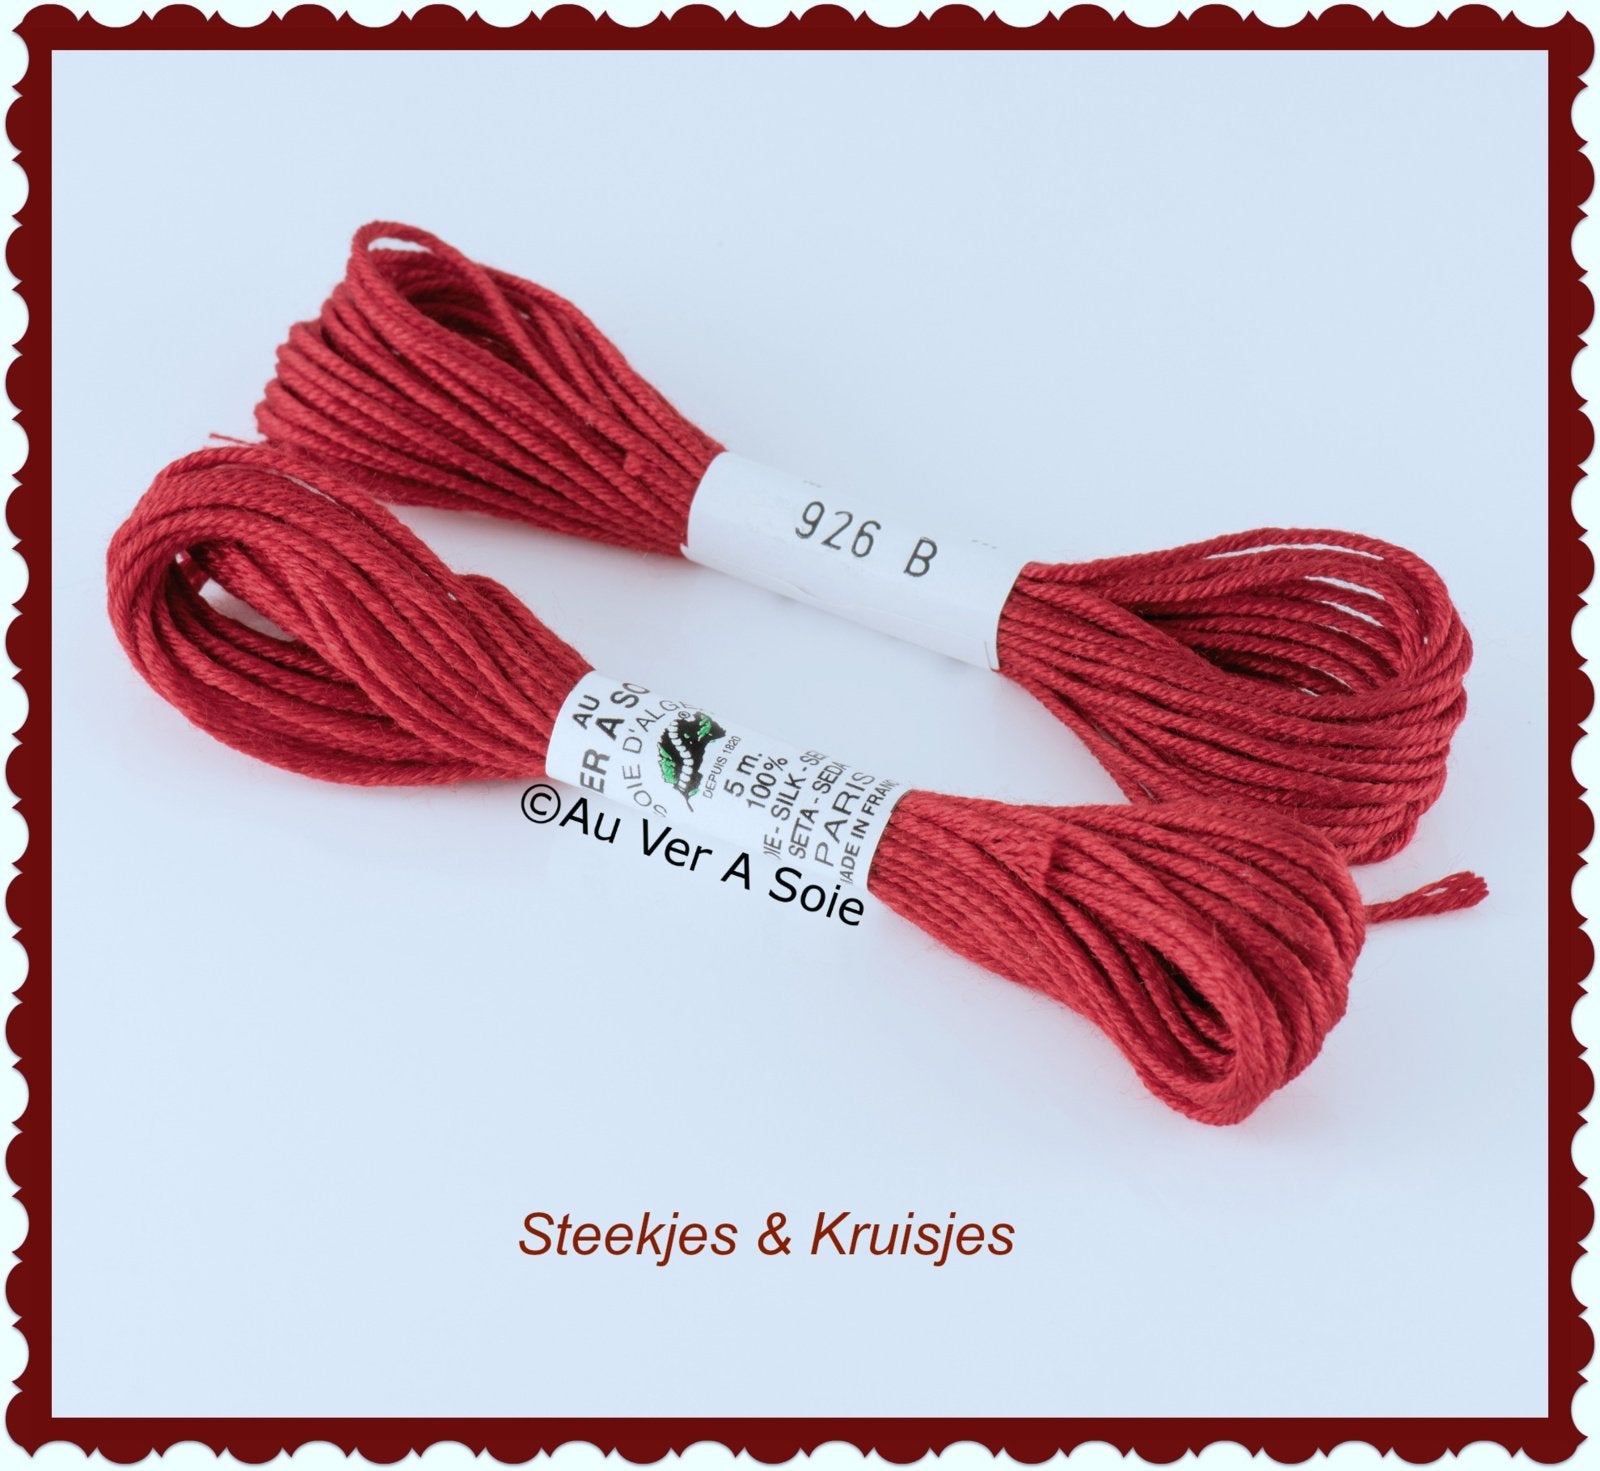 Au ver ie "soie d'alger" silk yarn color no. 926